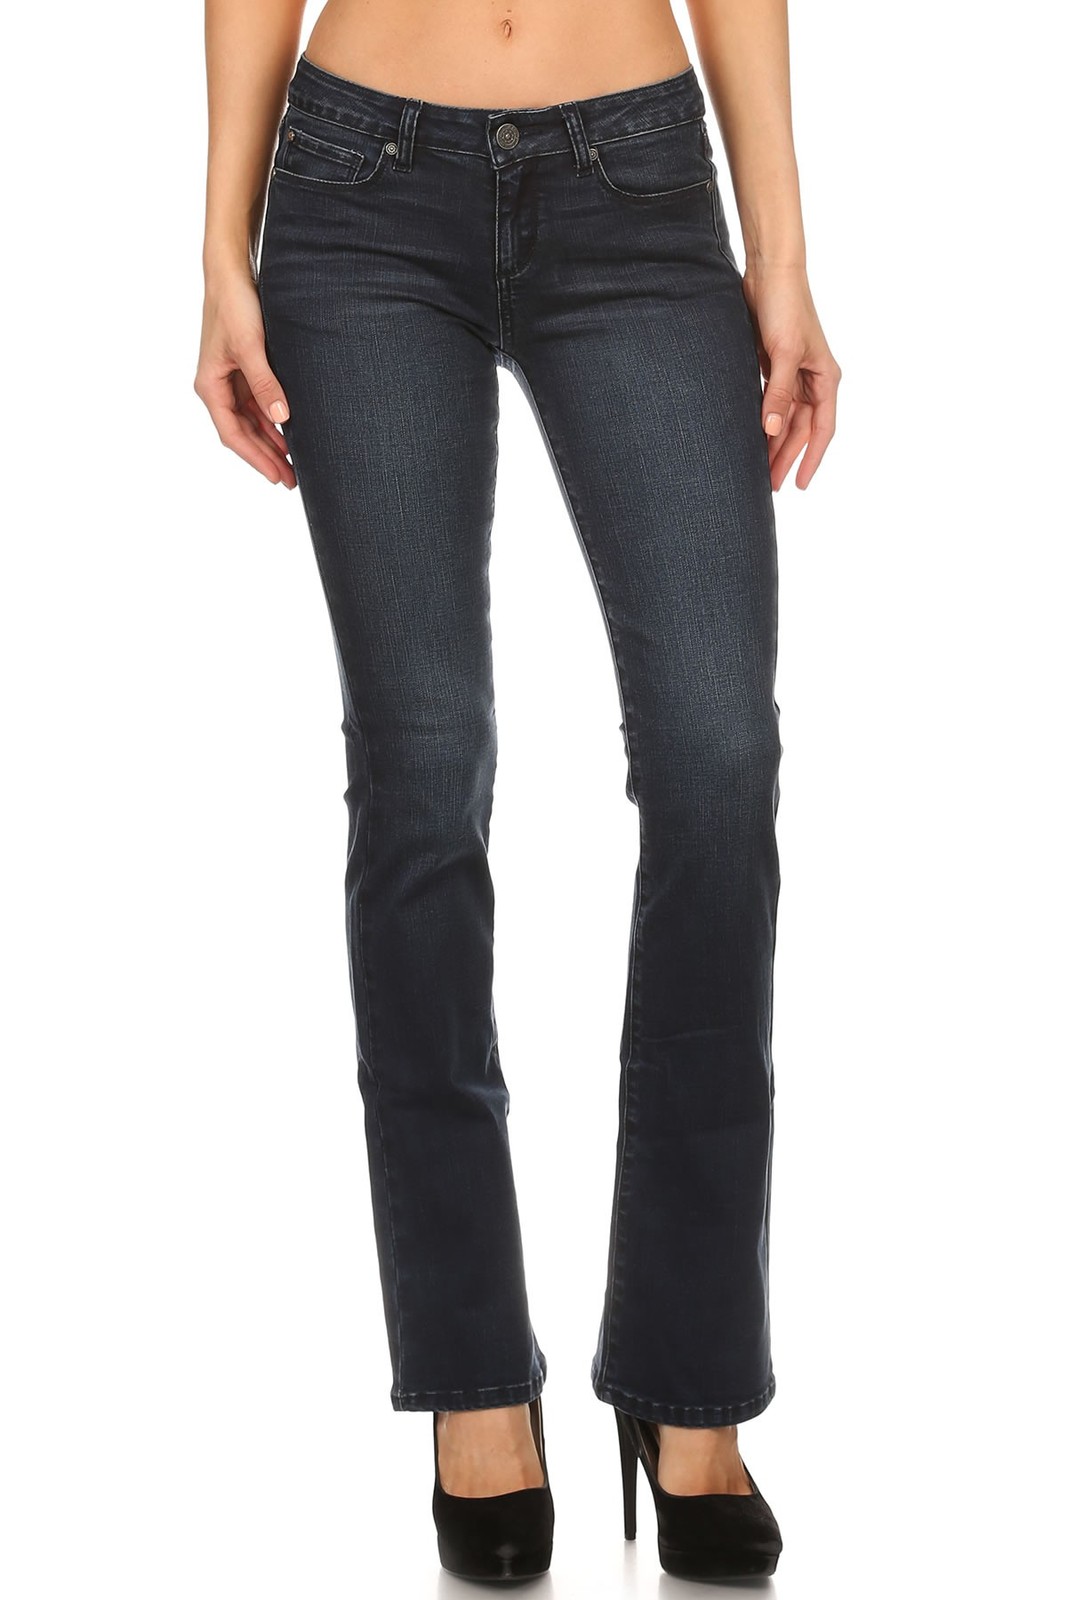 Womens Jeans Stretch Boot Cut Mid Rise Dark Wash Denim Pants EnJean ...